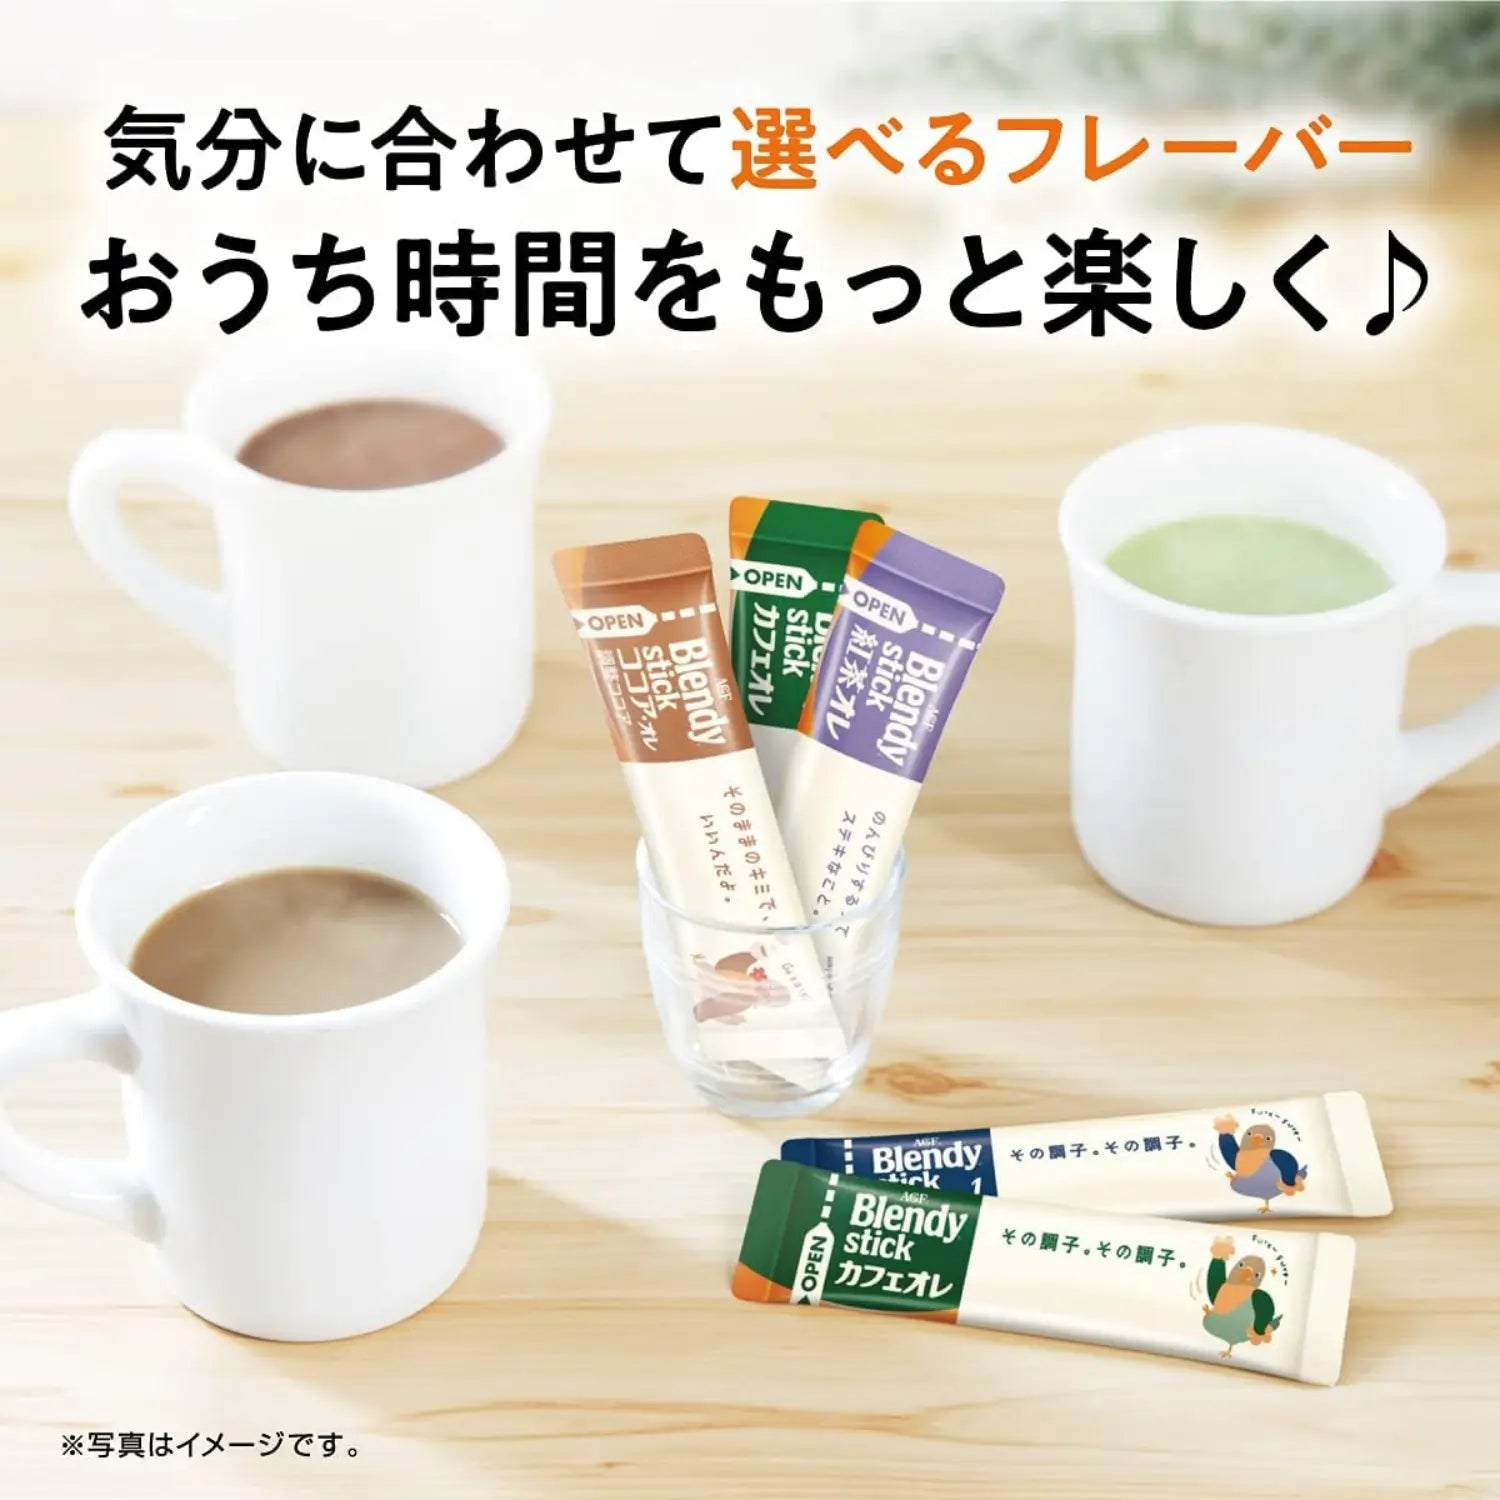 AGF Blendy Kocha Latte (Pack of 6/27) - Buy Me Japan